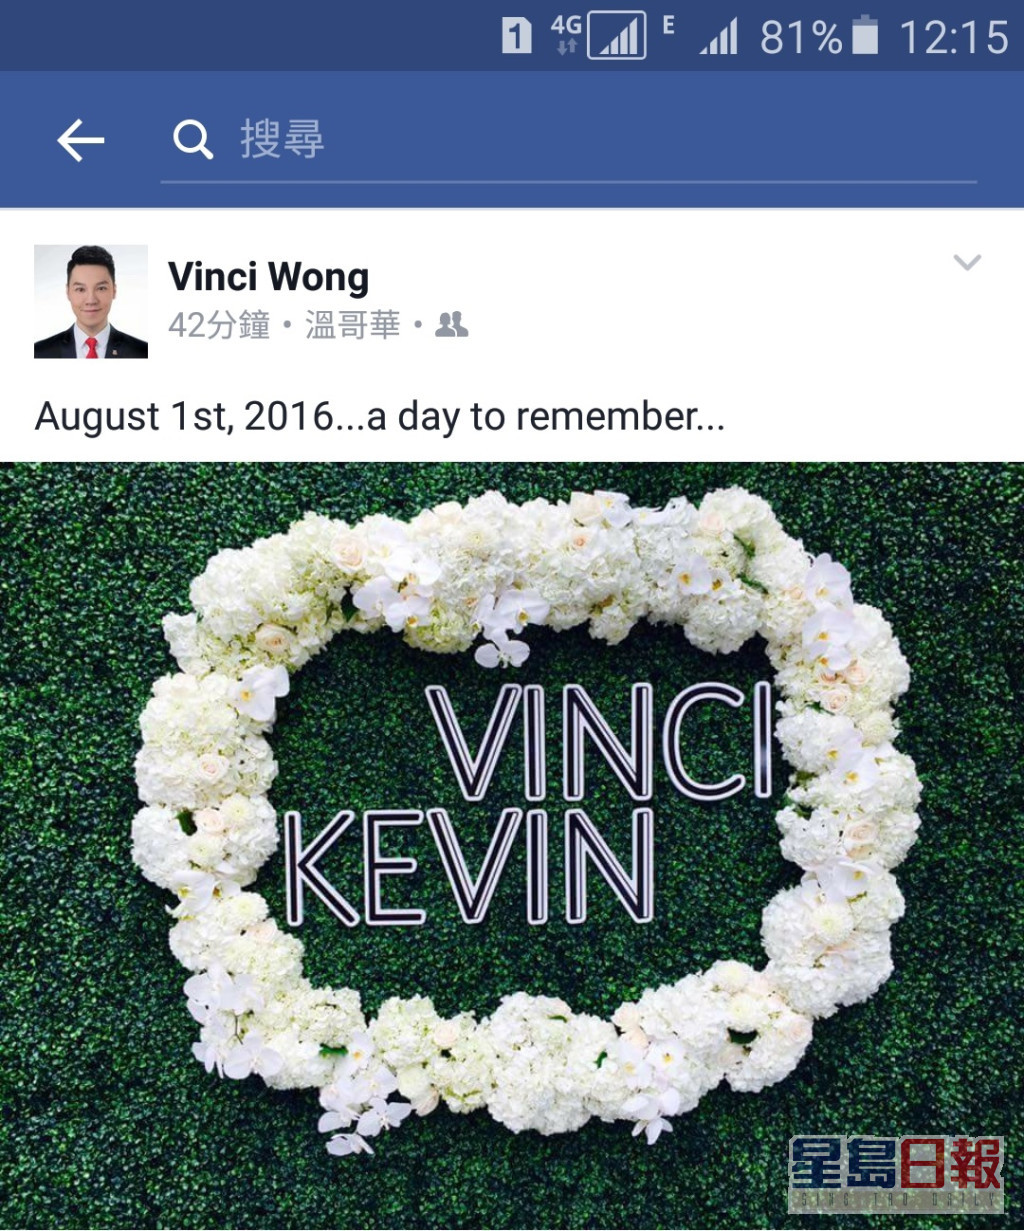 Vinci 和Kevin是香港娱乐圈首宗公开的同性婚姻。